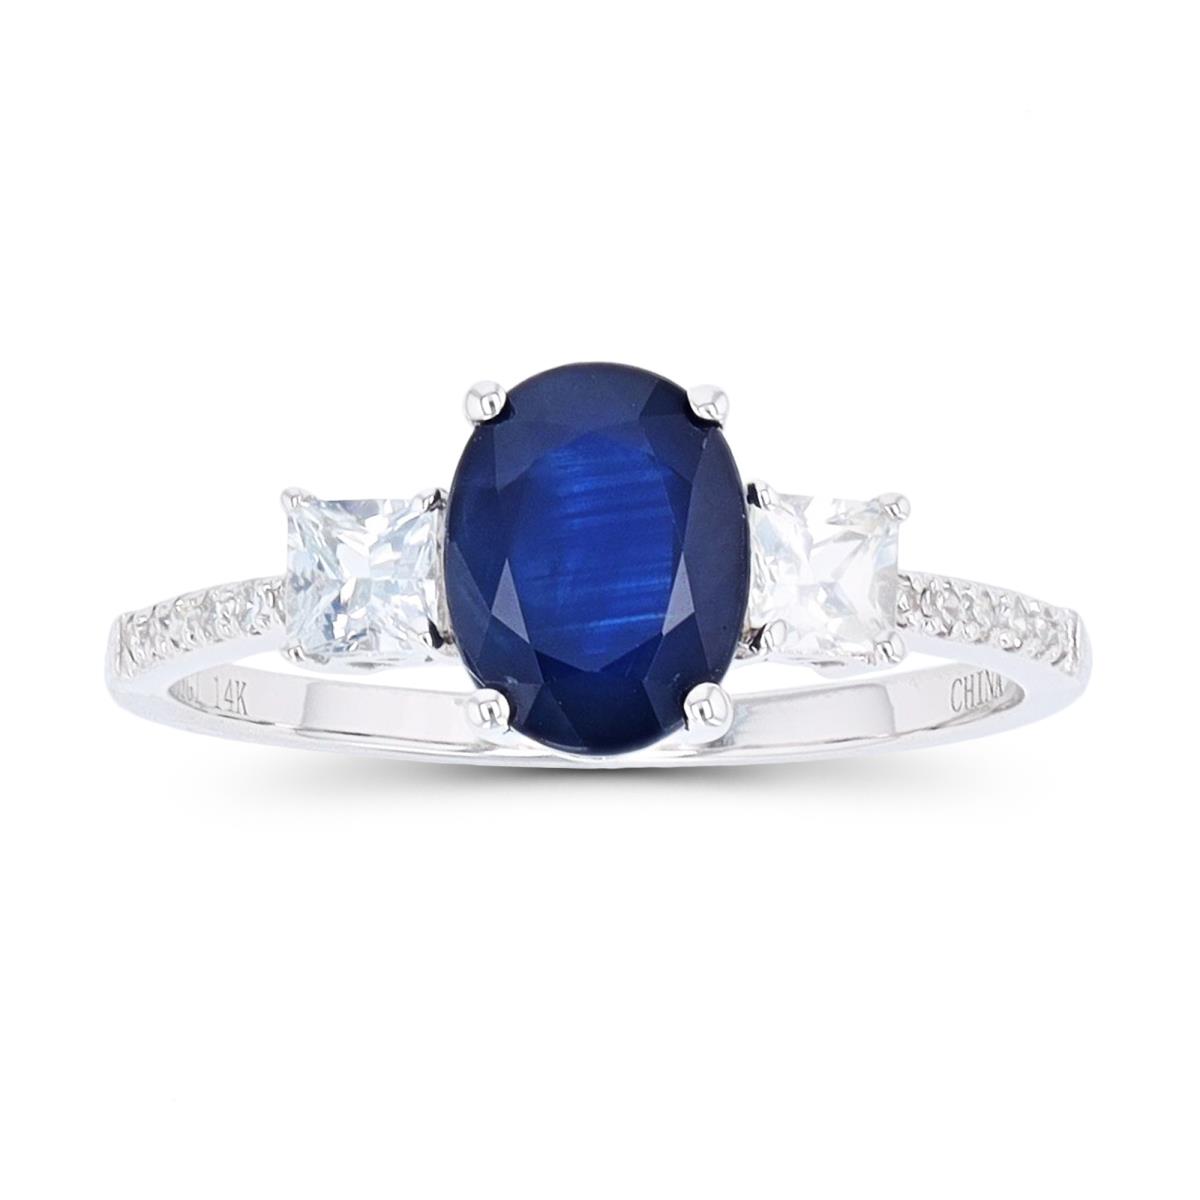 14K White Gold 0.054cttw Rnd Diamonds & 8x6mm Ov Blue Sapphire/3mm Princess White Sapphire Ring